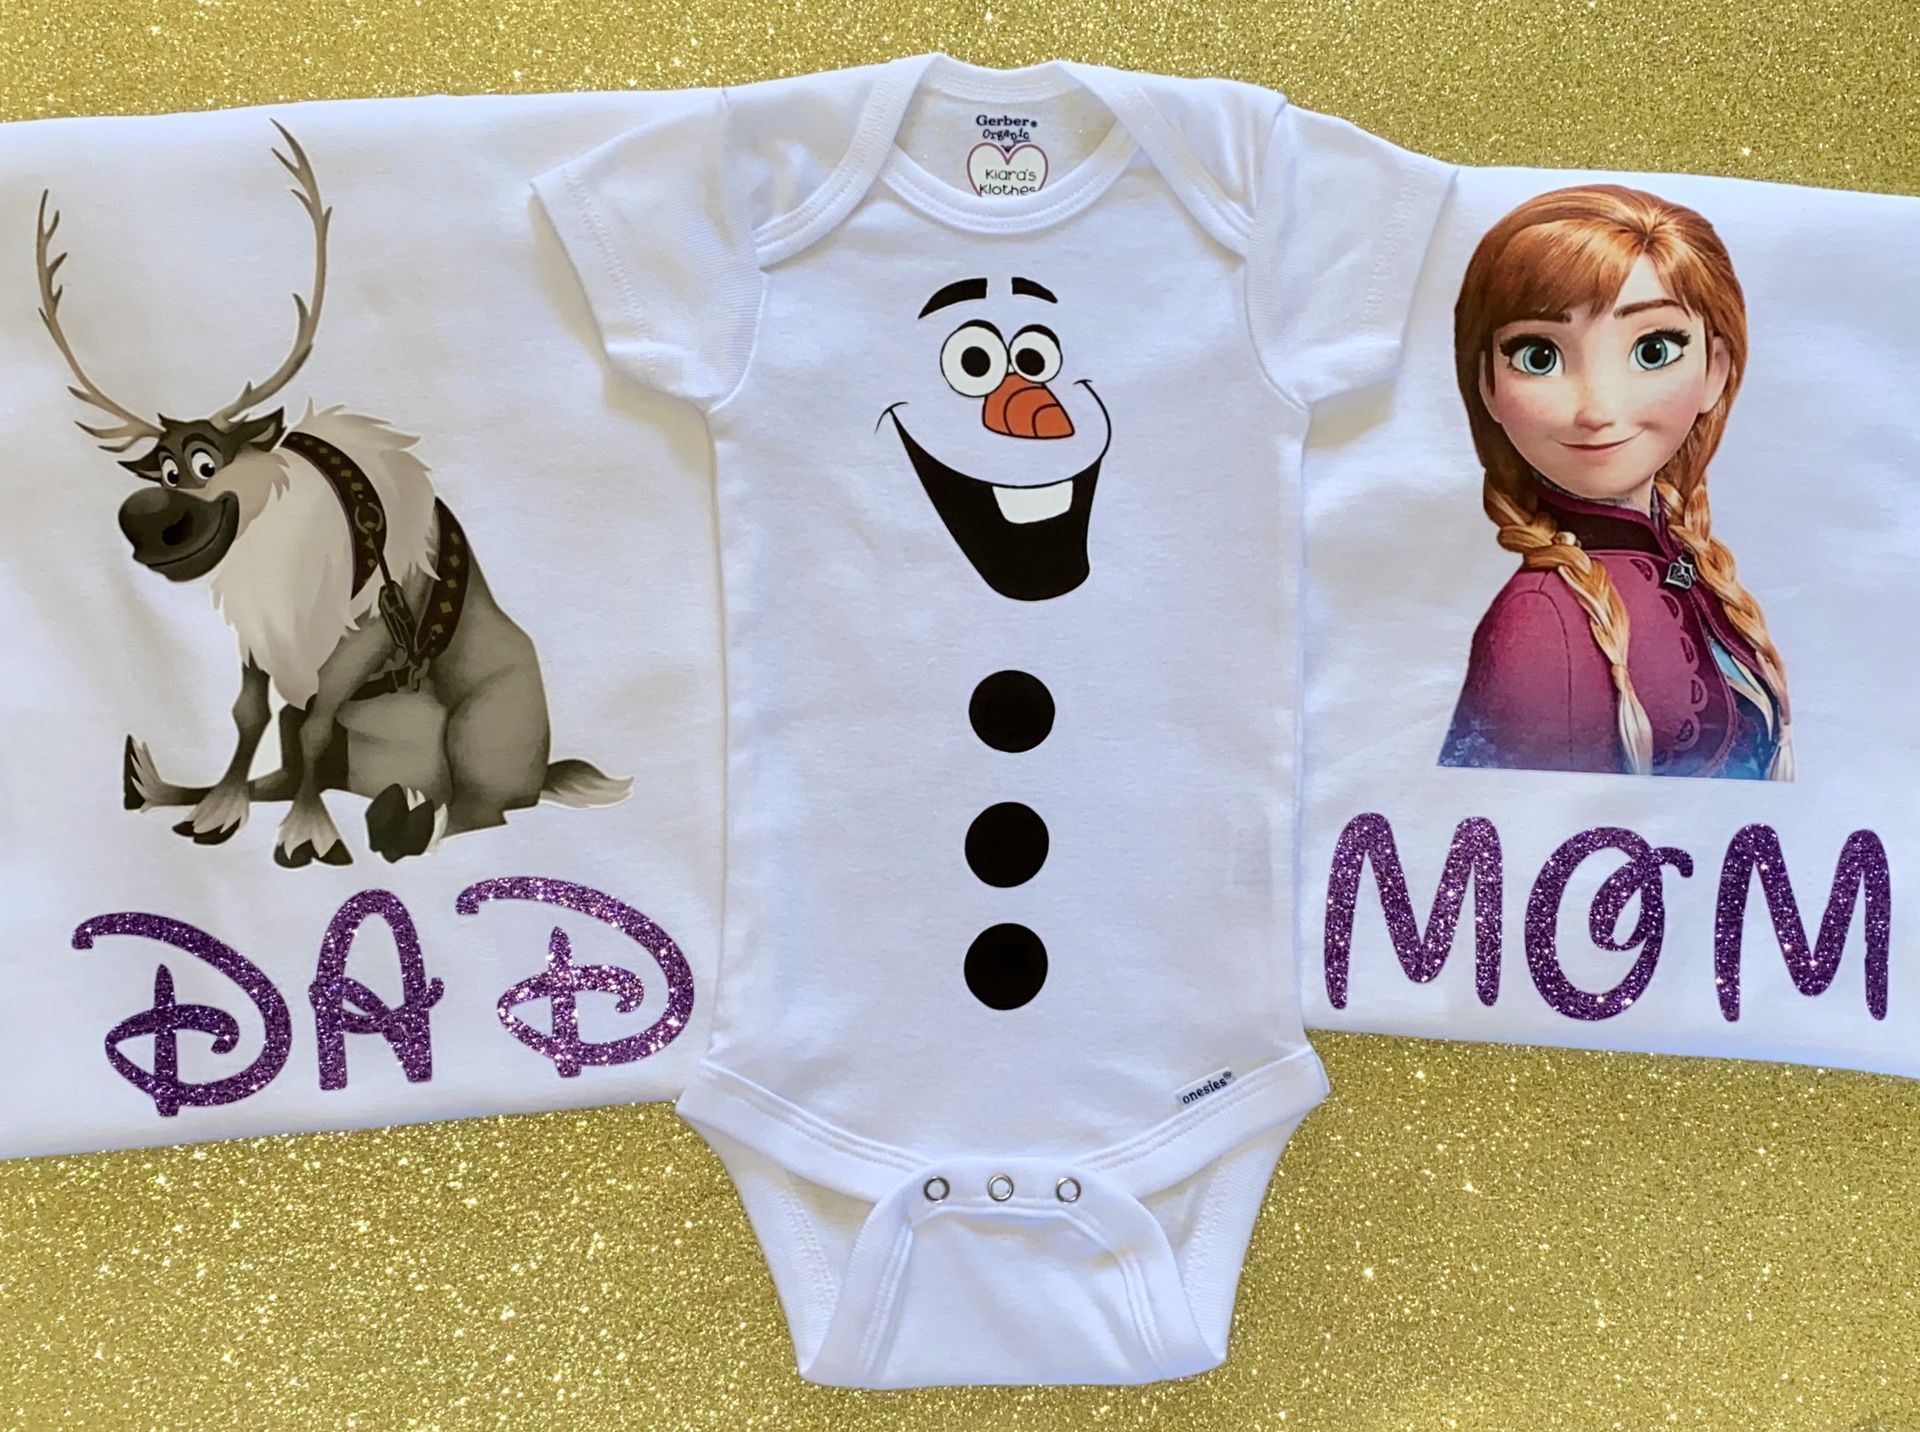 Frozen Elsa ❄️ Birthday Outfit, Family Anna/Sven Shirts & Olaf Onesie